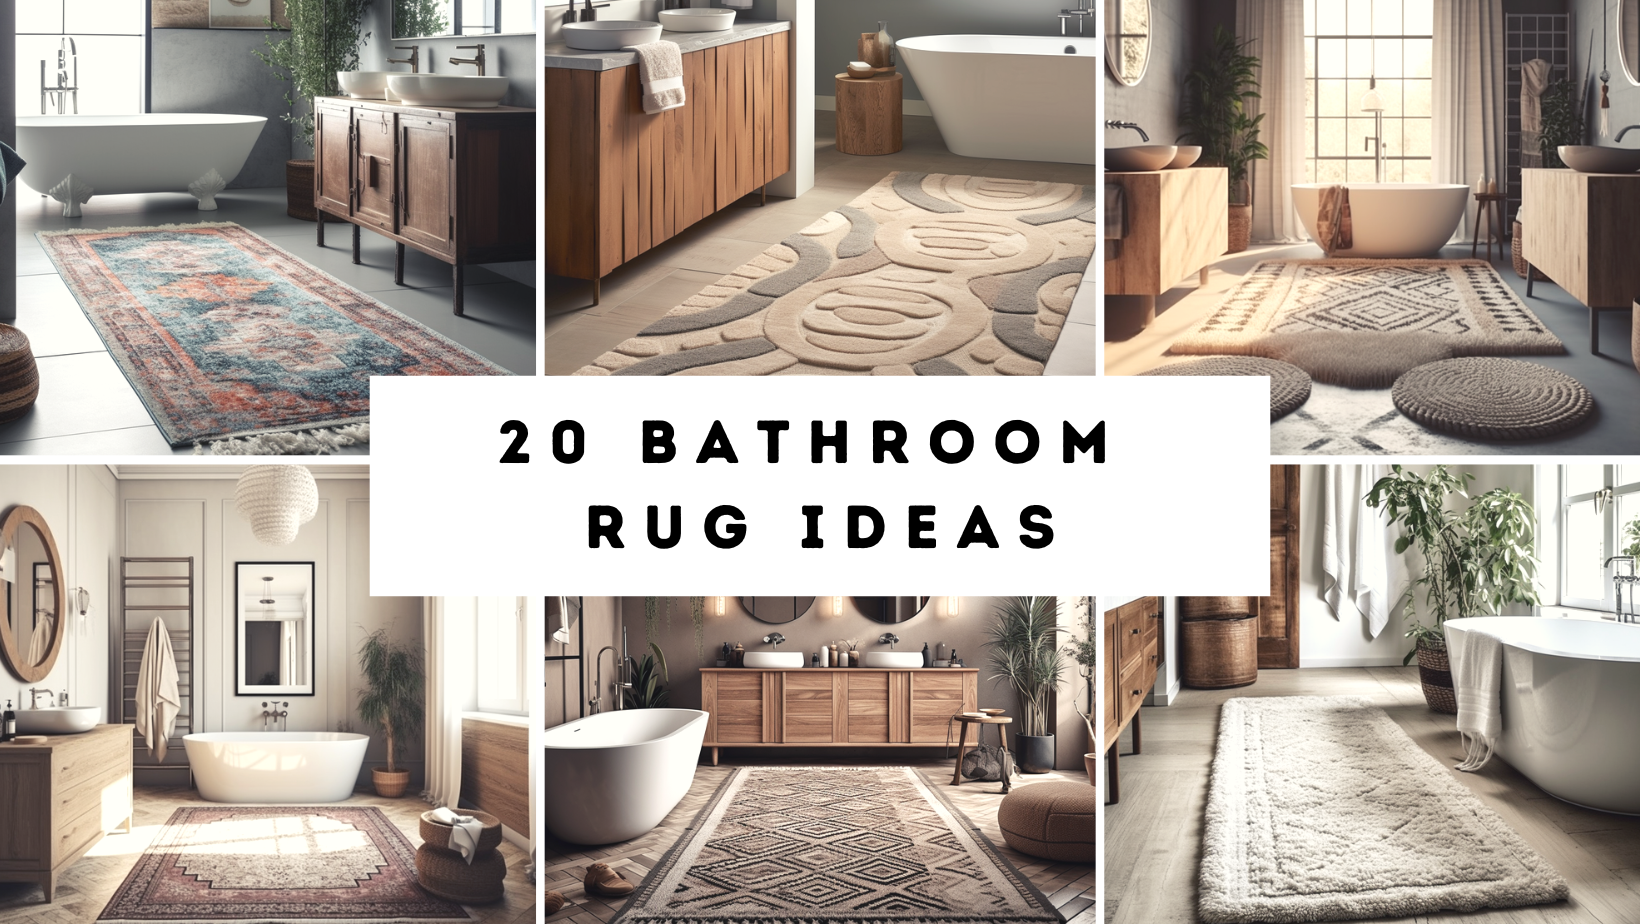 20 Bathroom Rug Ideas That Will Floor You